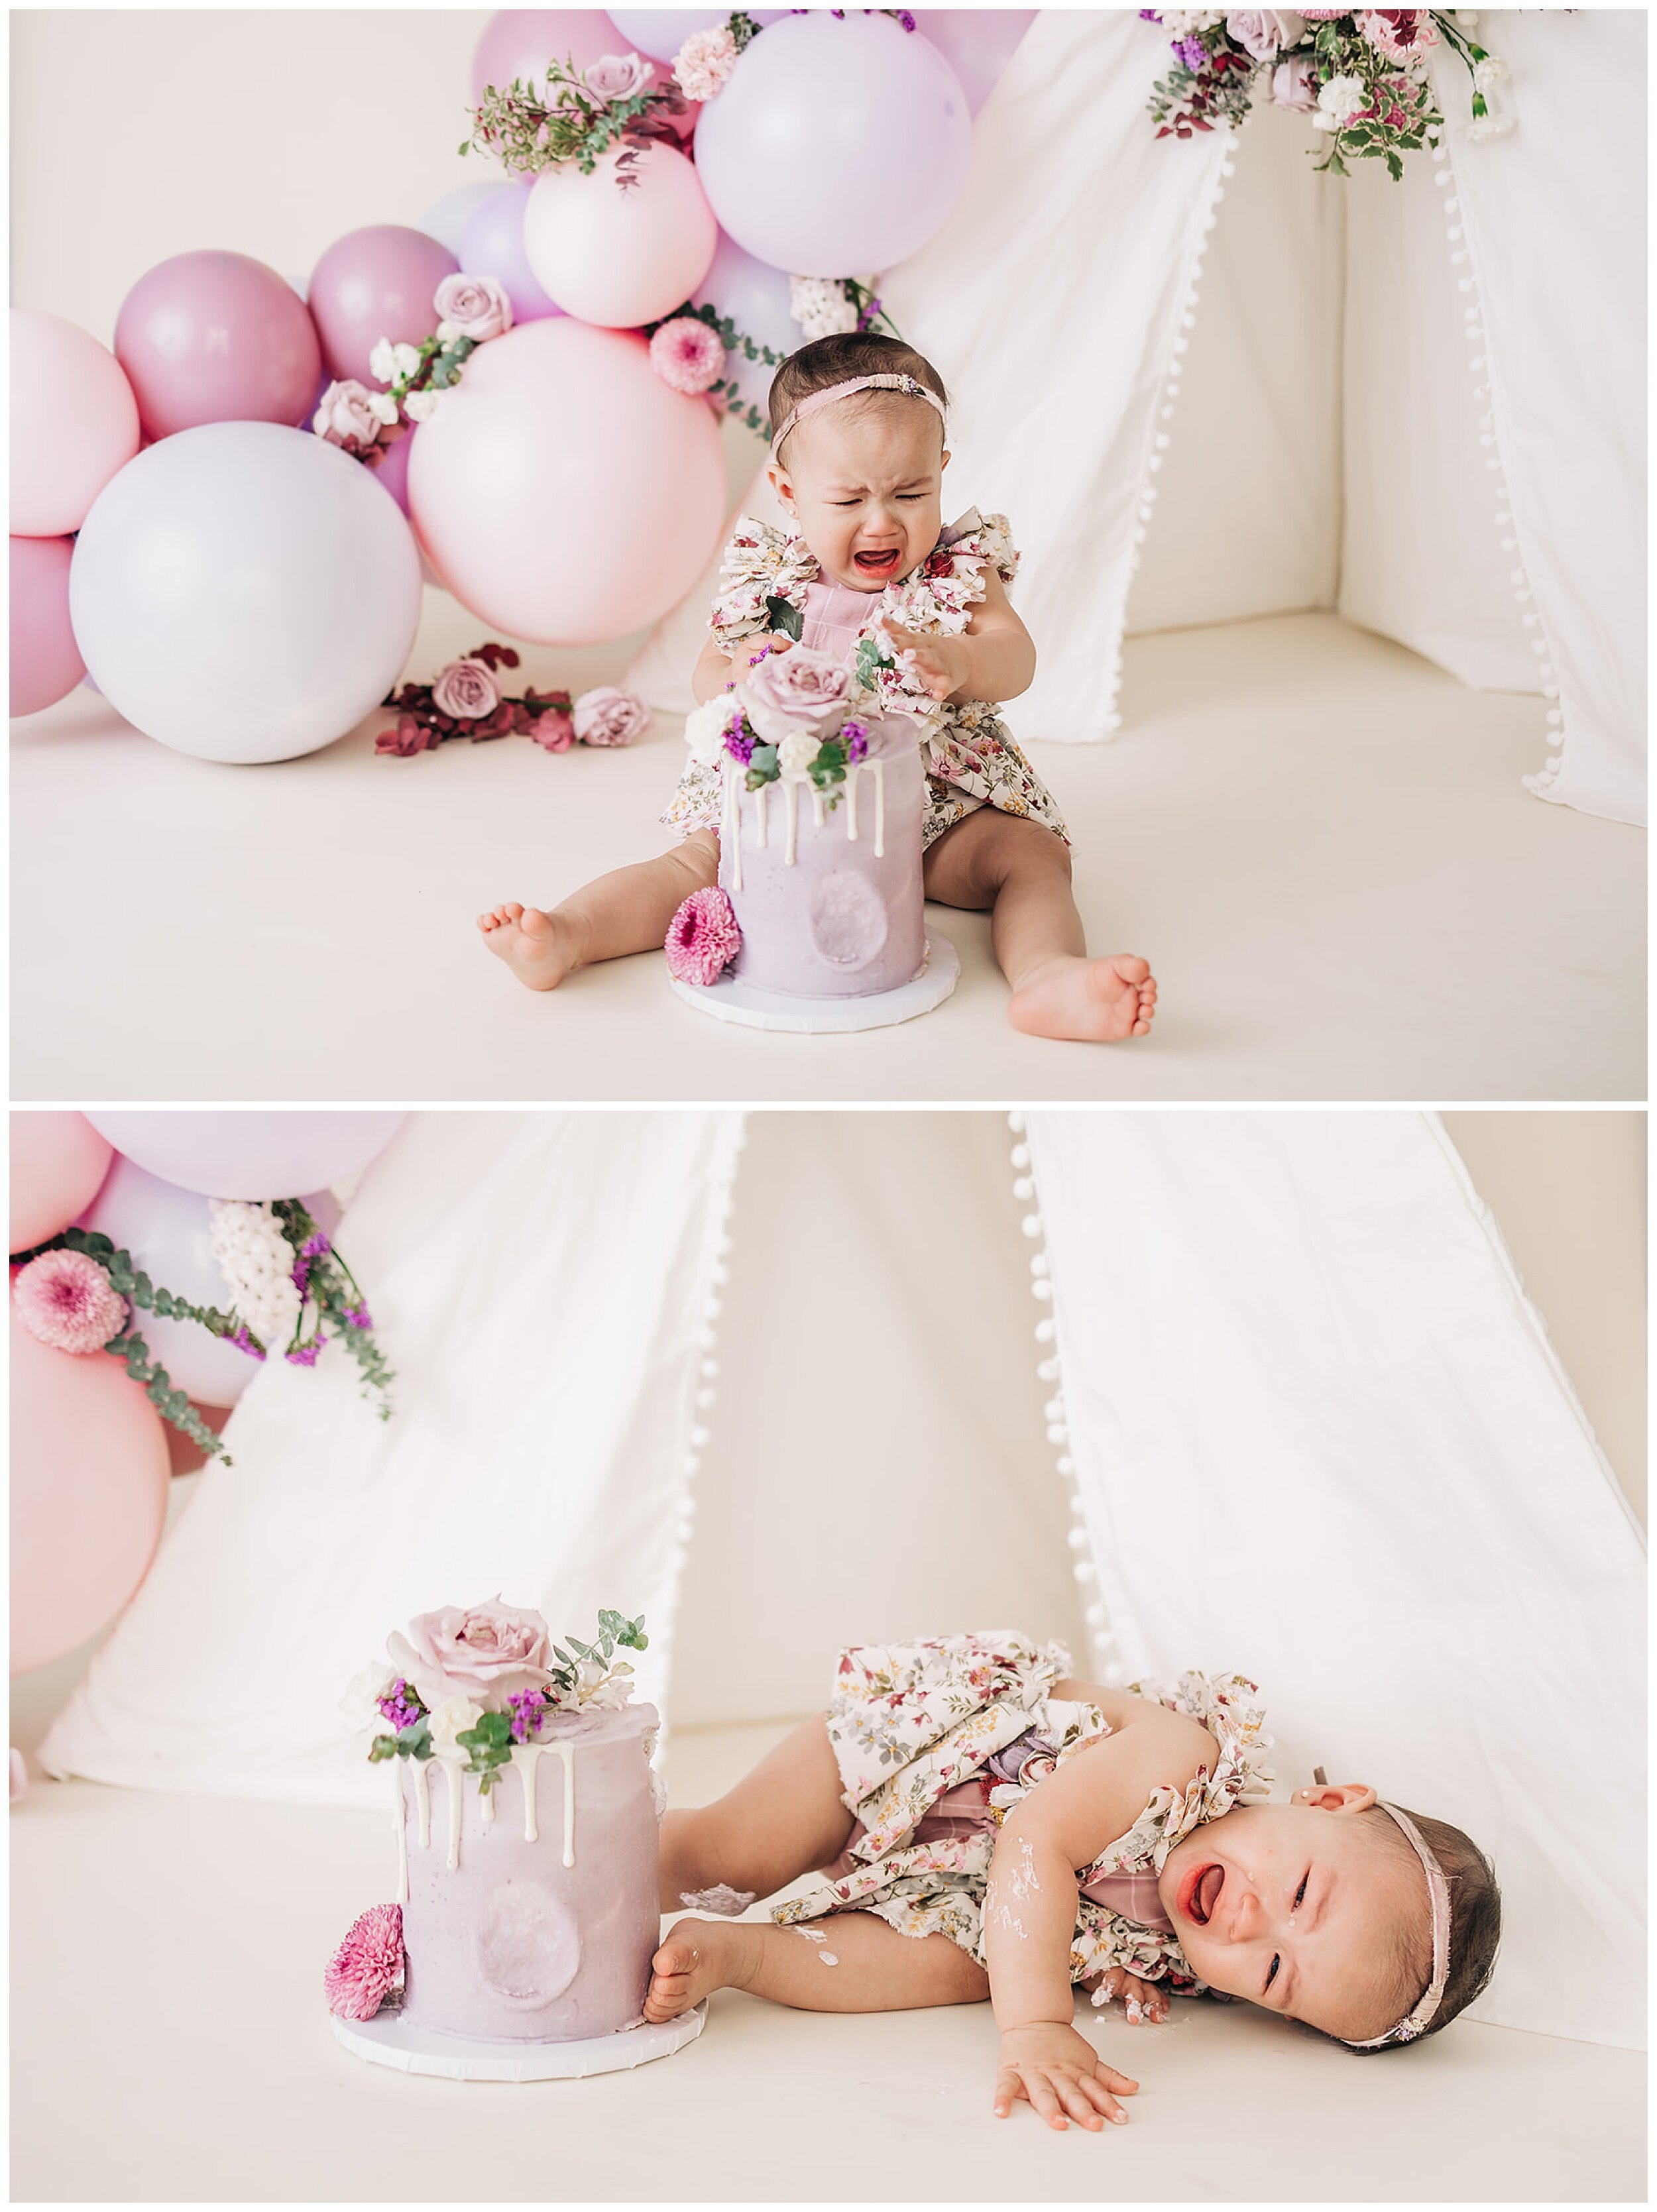 Fun First Birthday Ideas: A Girly Teepee First Birthday Photoshoot! — Rhea Ashlynn Photography